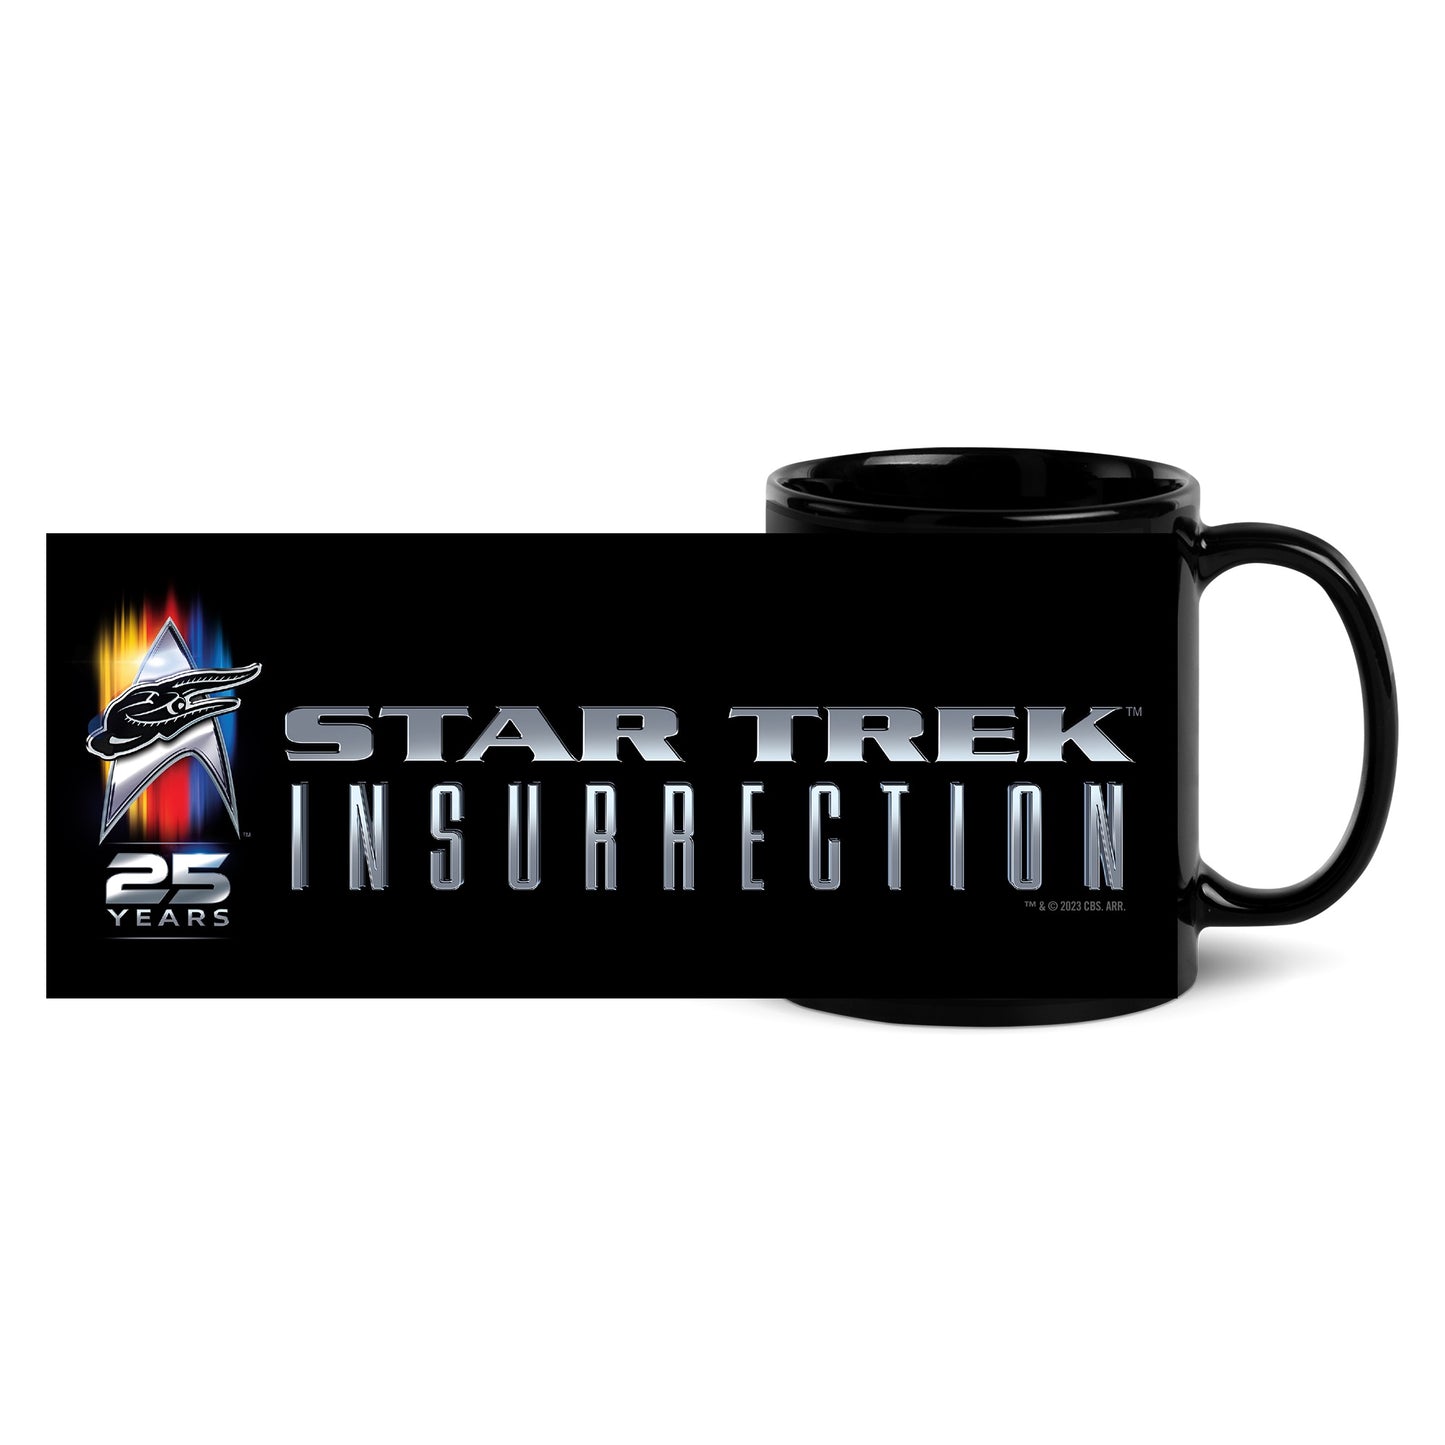 Star Trek IX: Insurrection Taza negra 25 aniversario